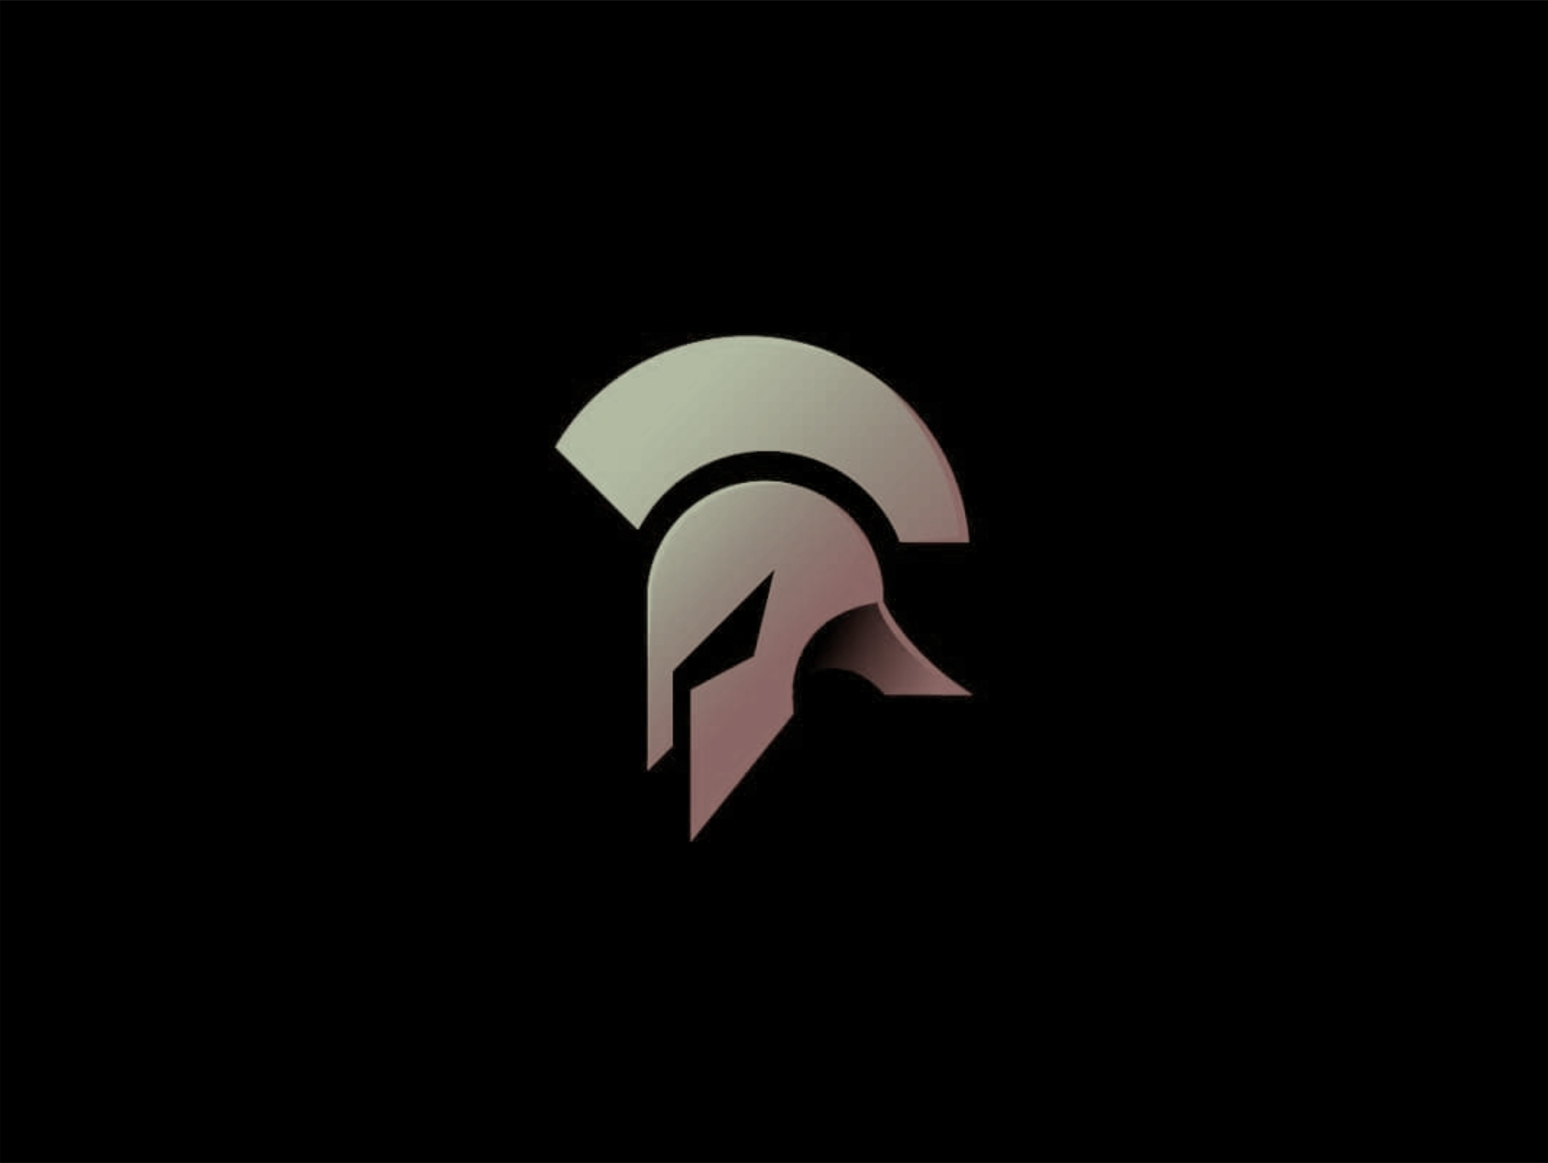 spartan helmet logo